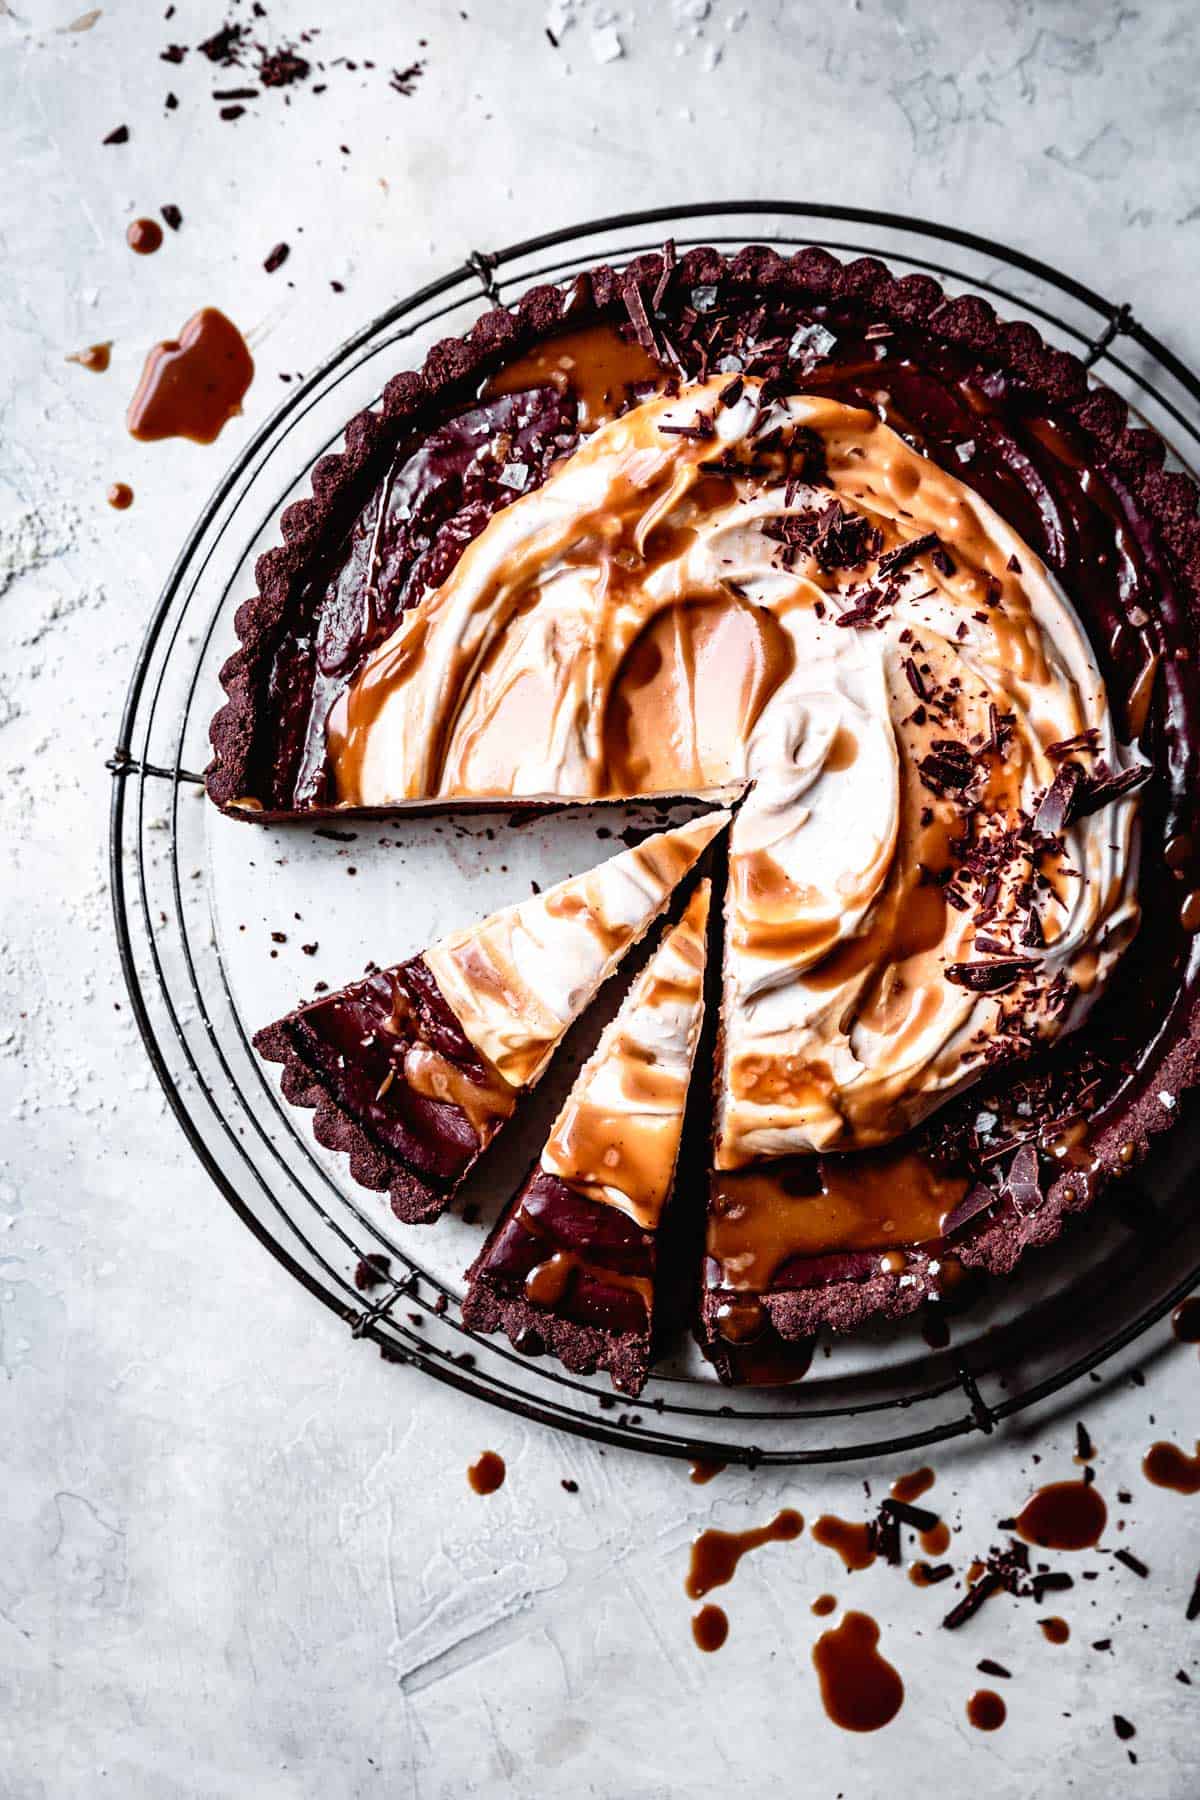 healthy chocolate recipes: gf vegan chocolate tahini tart